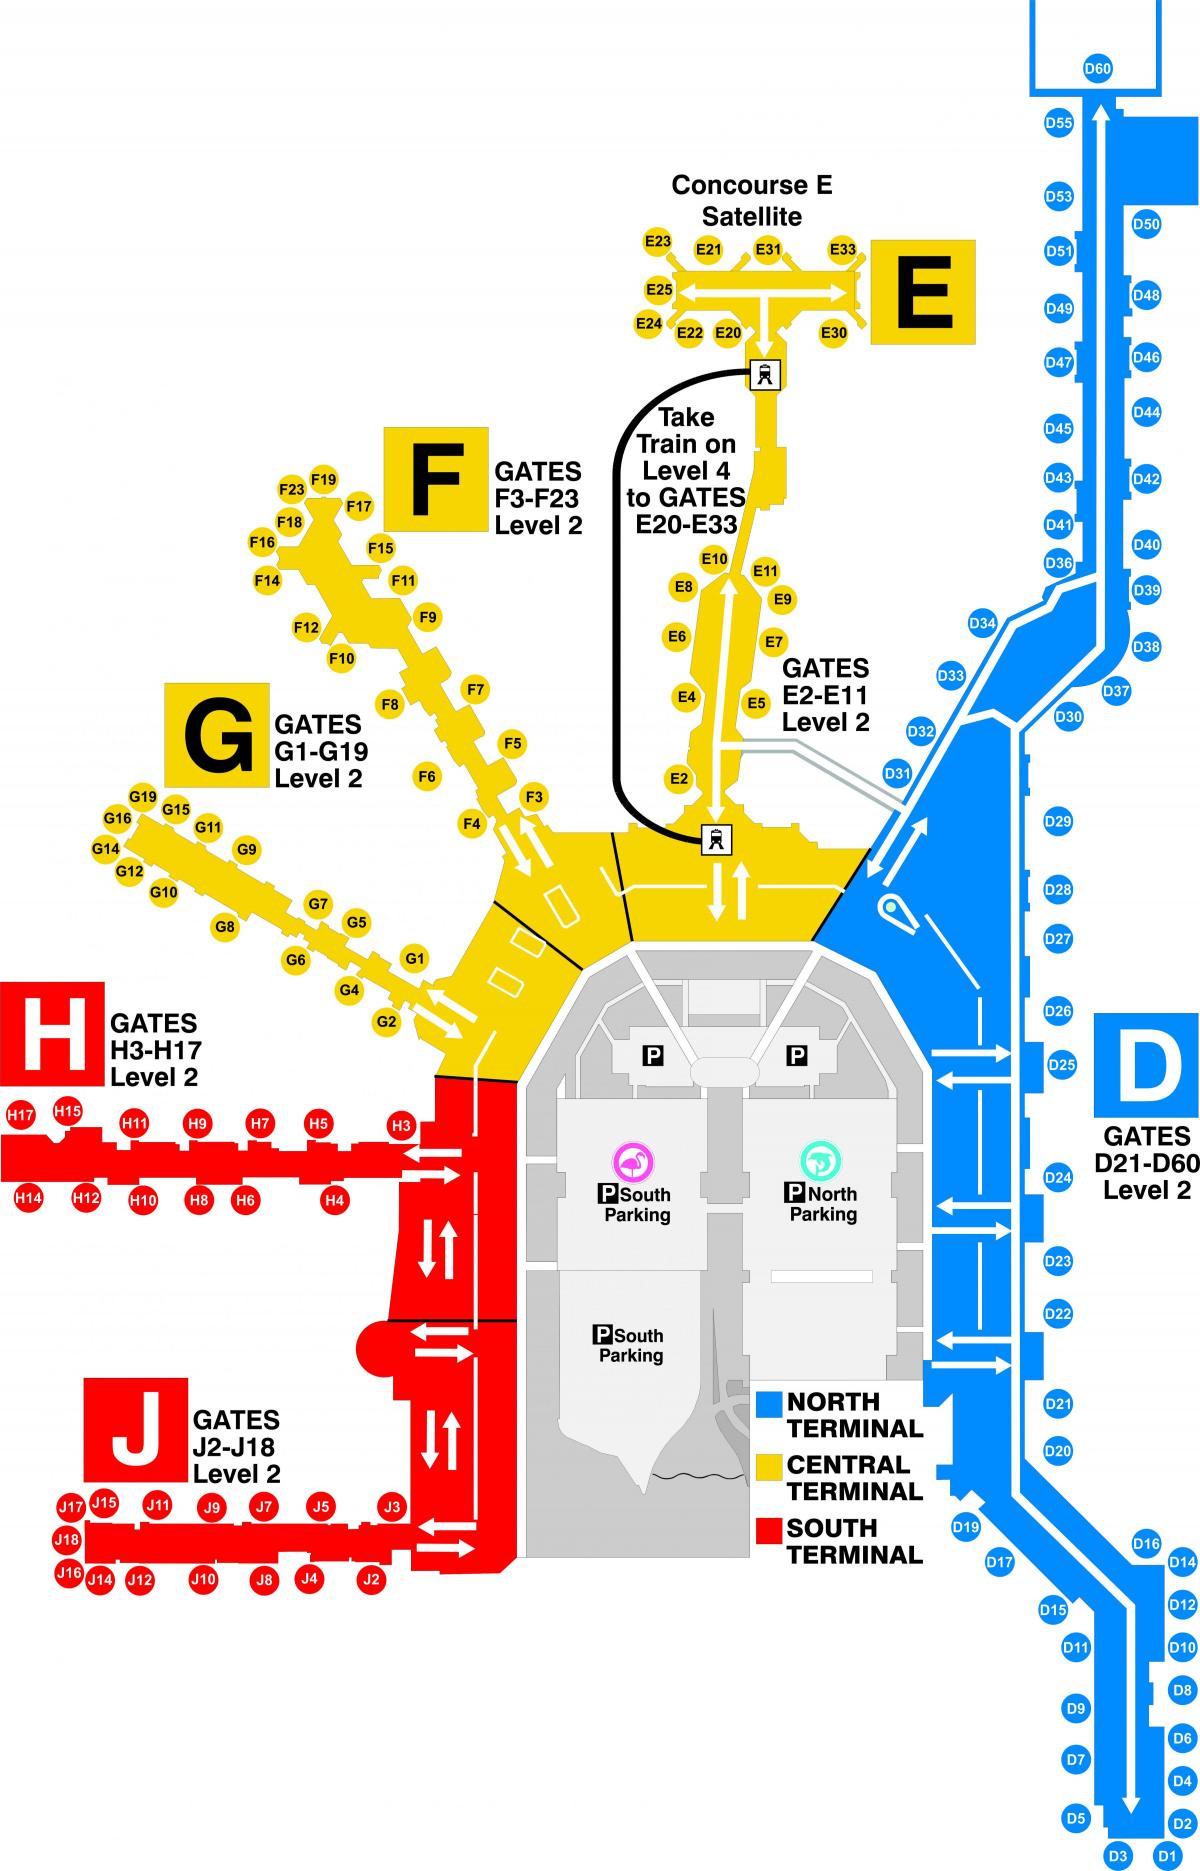 Miami airport terminal map